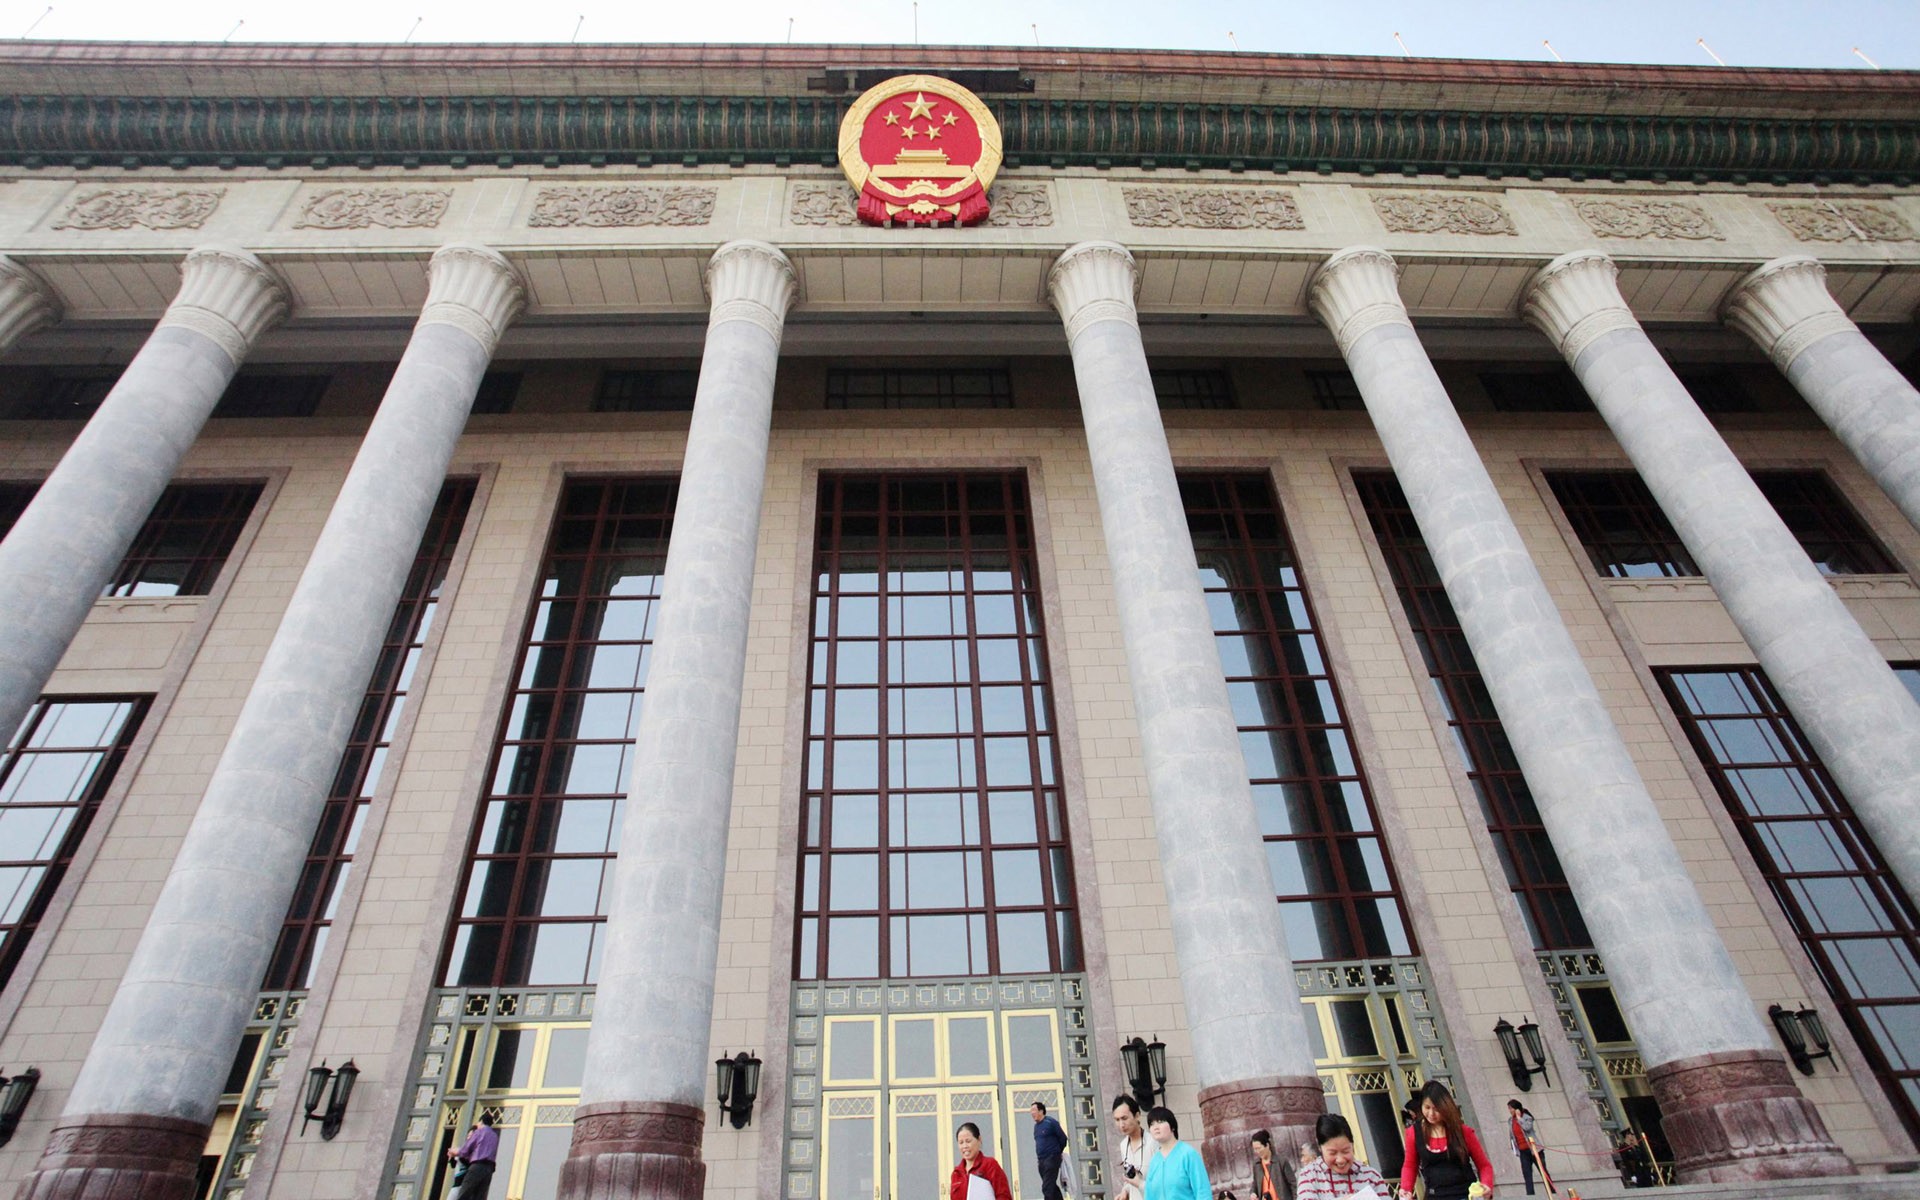 Beijing Tour - Great Hall (ggc works) #14 - 1920x1200